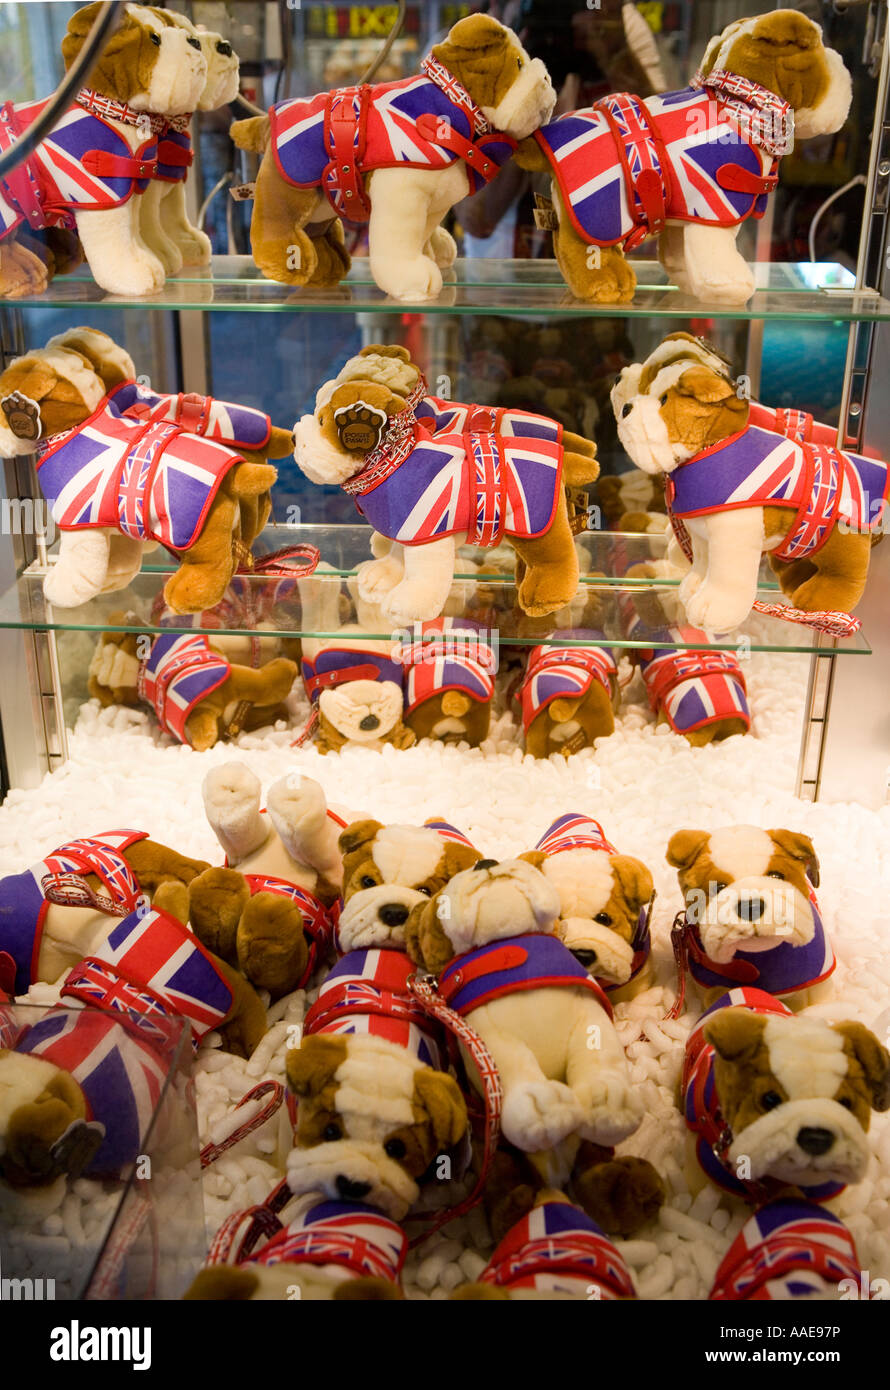 British bulldog soft toys in a display case in an amusement arcade. Stock Photo